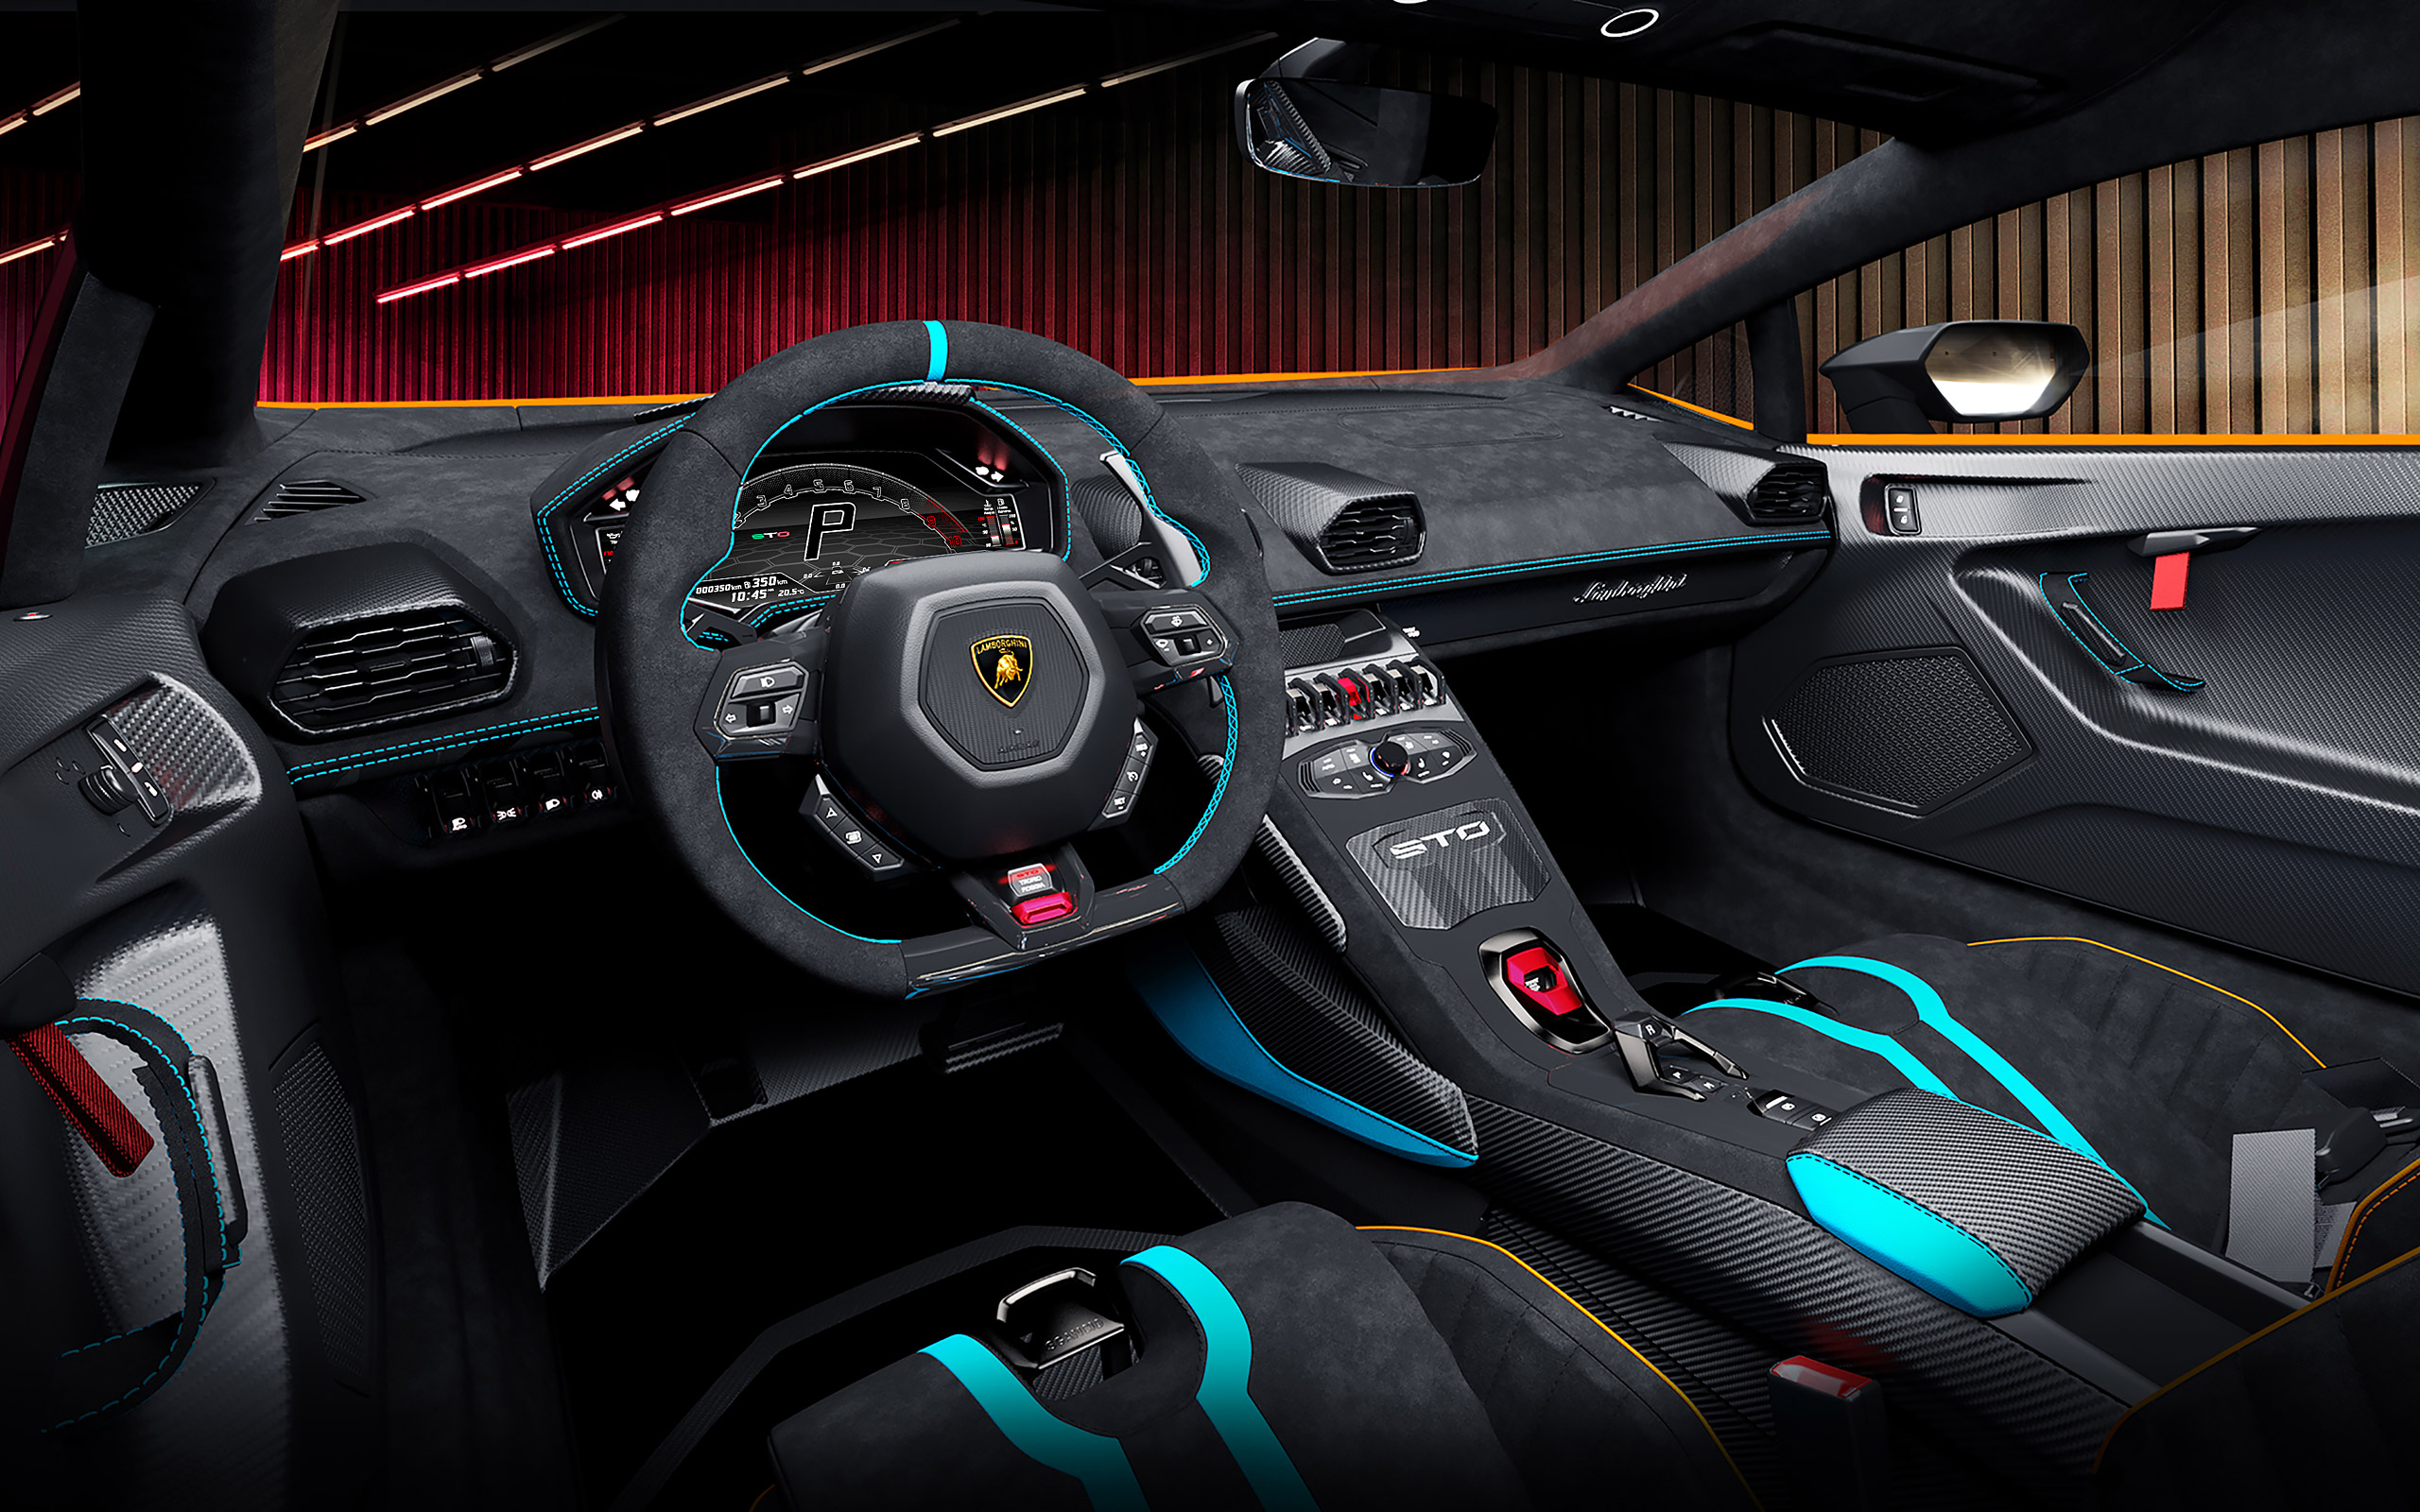  2021 Lamborghini Huracan STO Wallpaper.